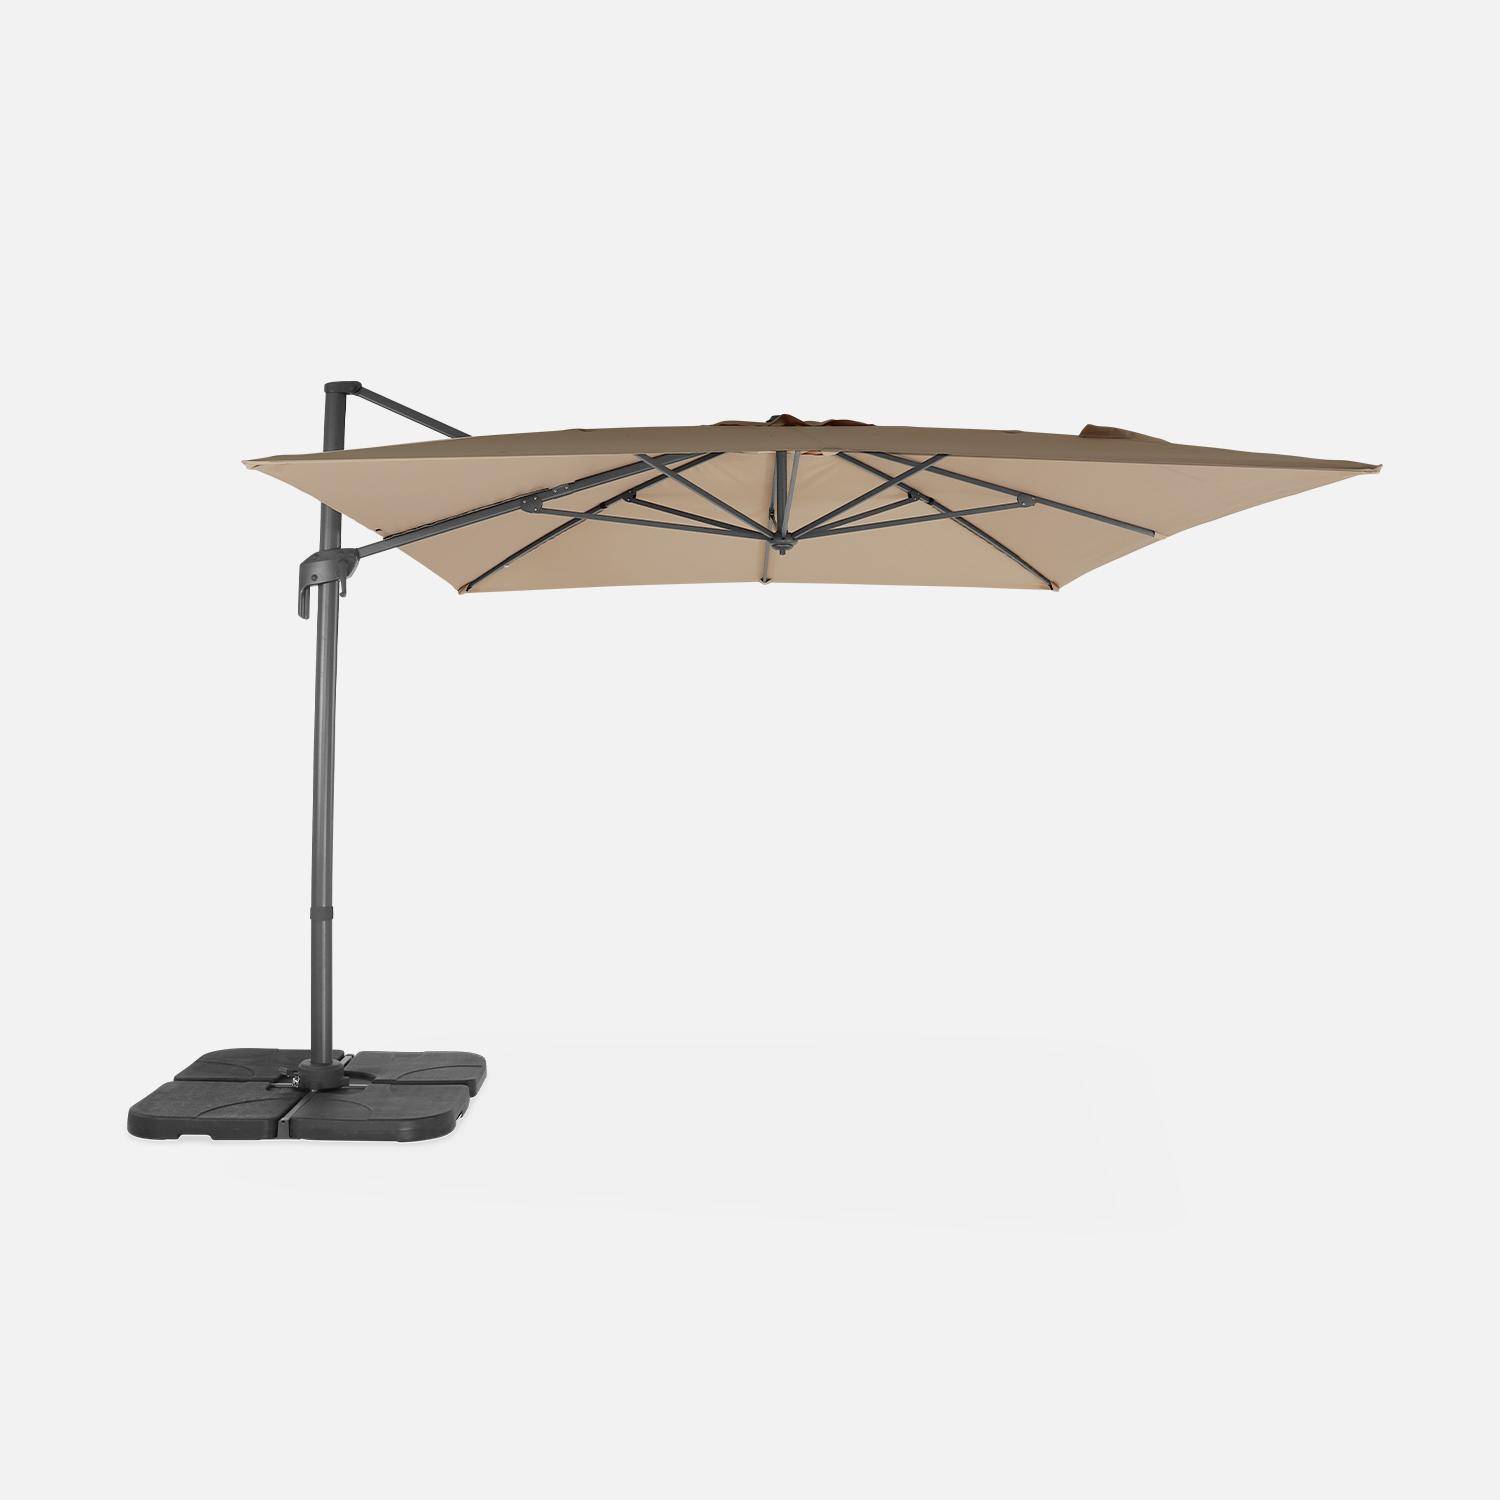 Parasol rectangular deportado 3 x 4 m - Antibes - beige - parasol deportado, basculante, plegable y giratorio a 360,sweeek,Photo4